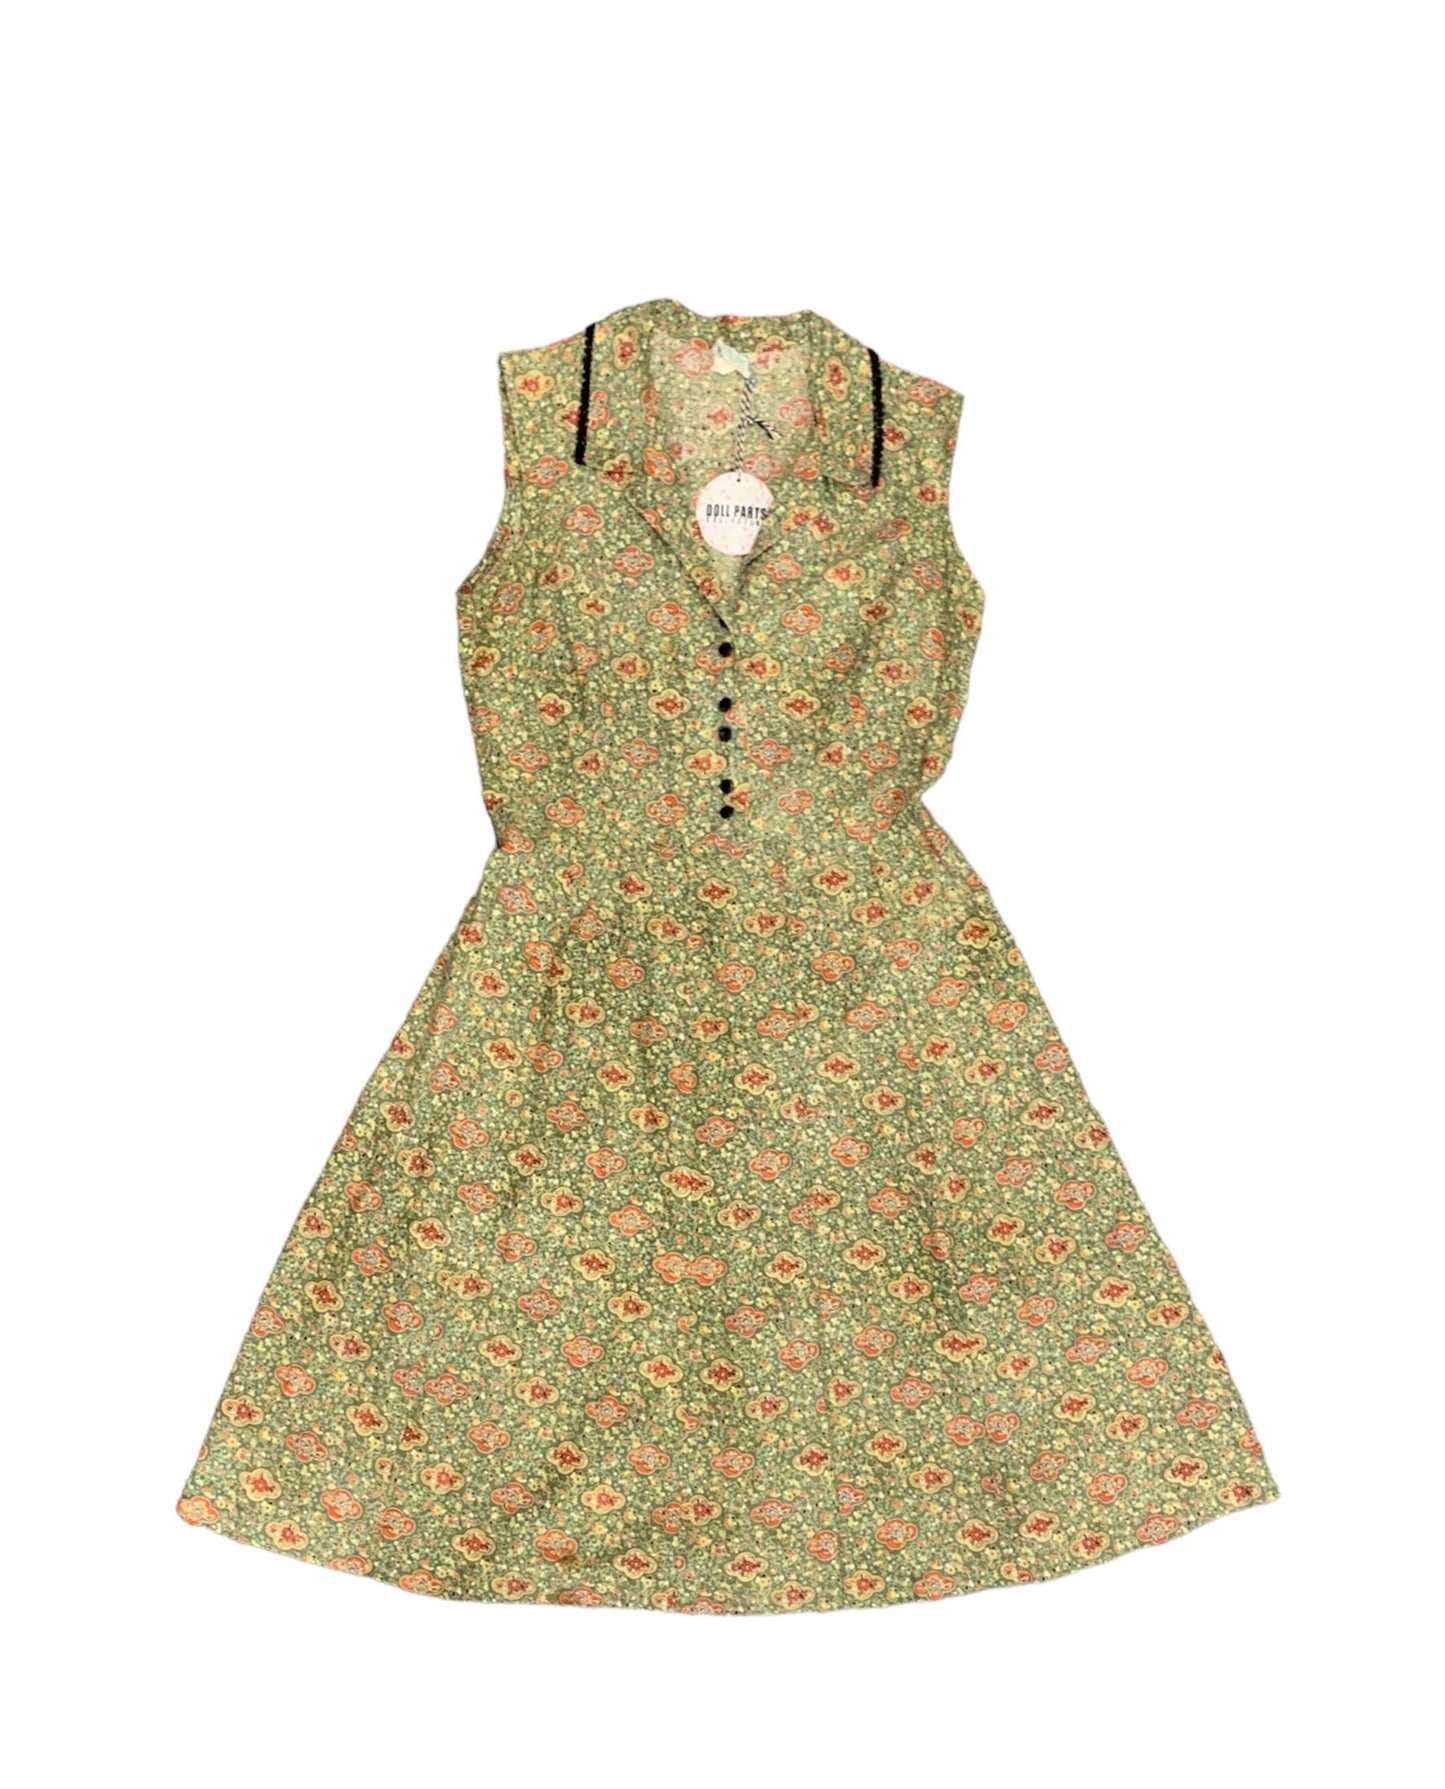 30’s/40’s Sleeveless Cotton Day Dress